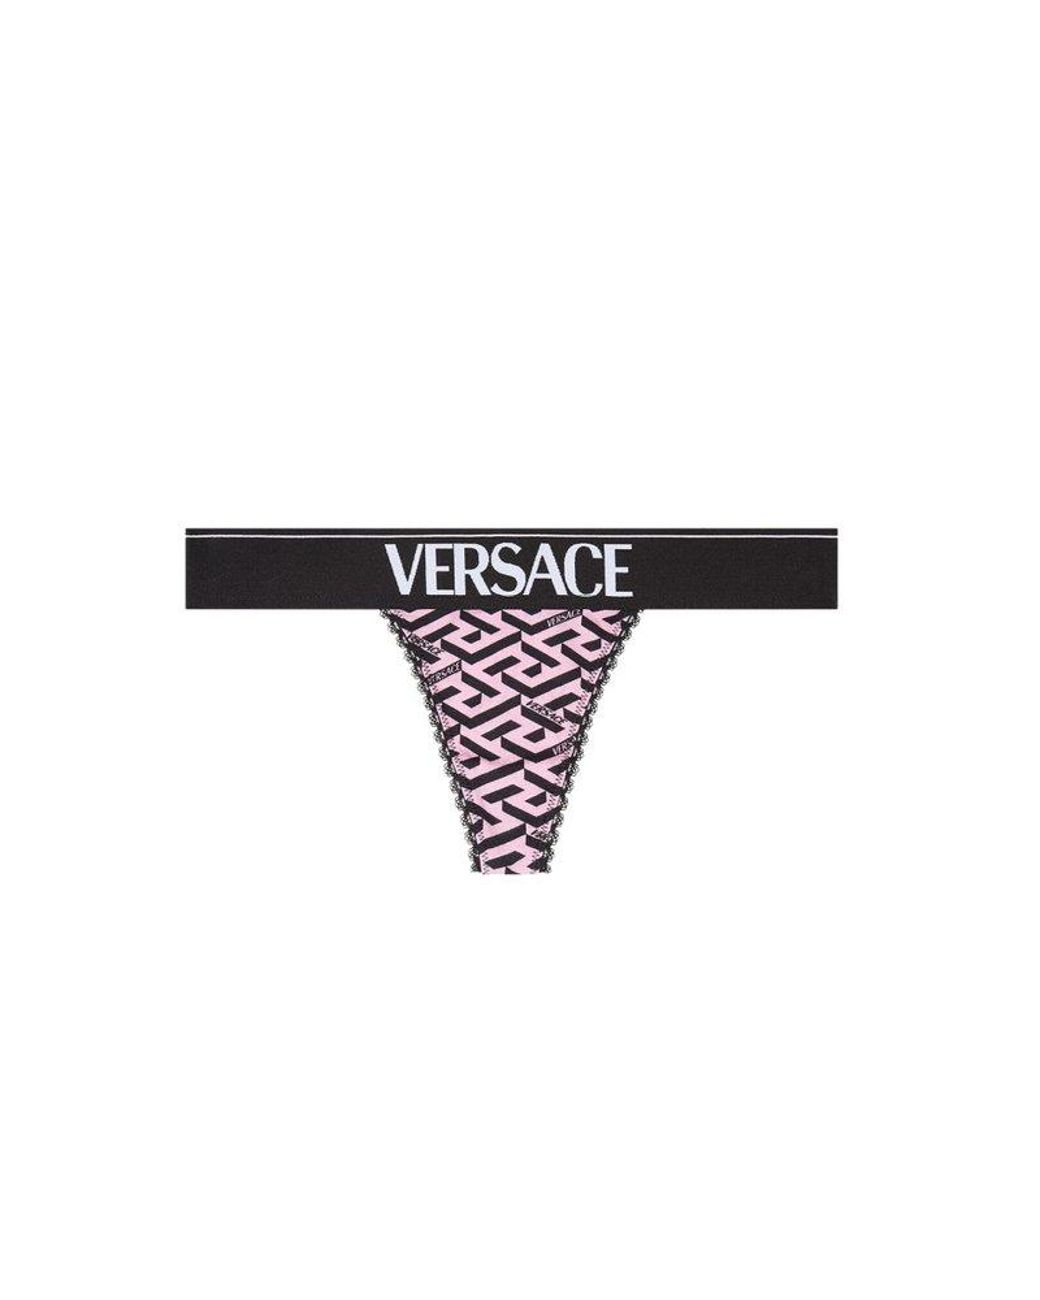 Versace Logo Waistband La Greca Pattern Thong in Pink